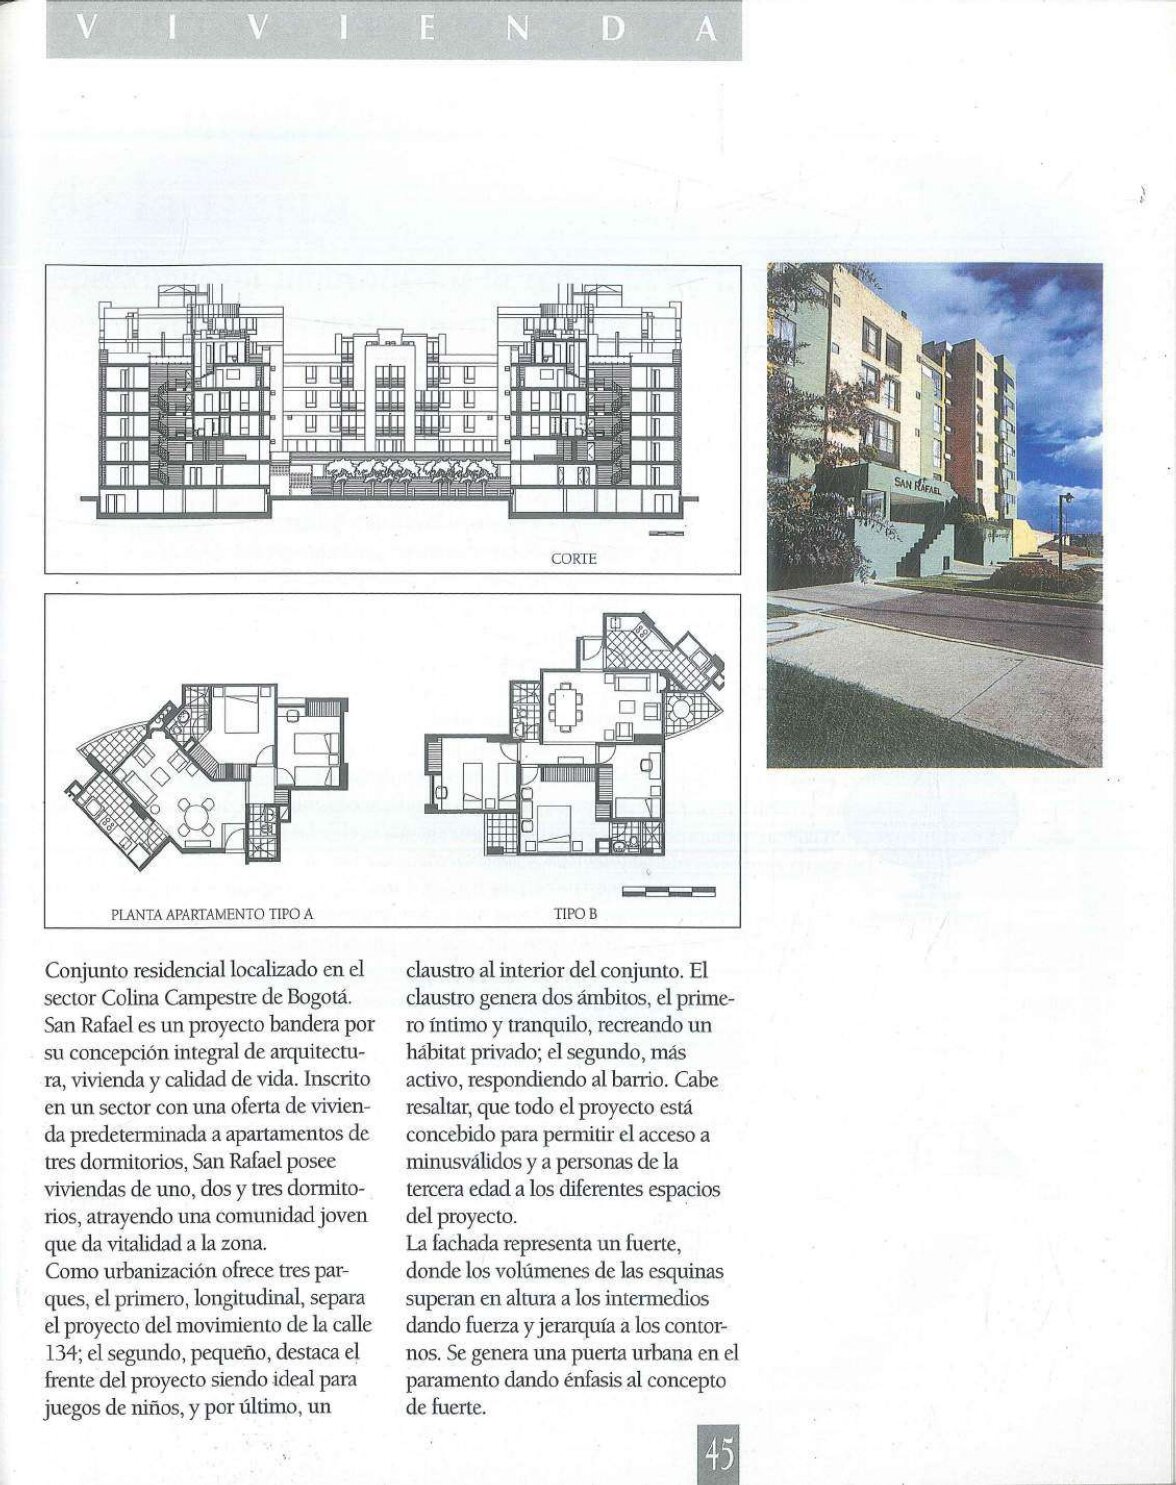 2002_Contexto Urbano- Obra reciente 1995-2002. REVISTA PROA 1_compressed (1)_page-0047.jpg